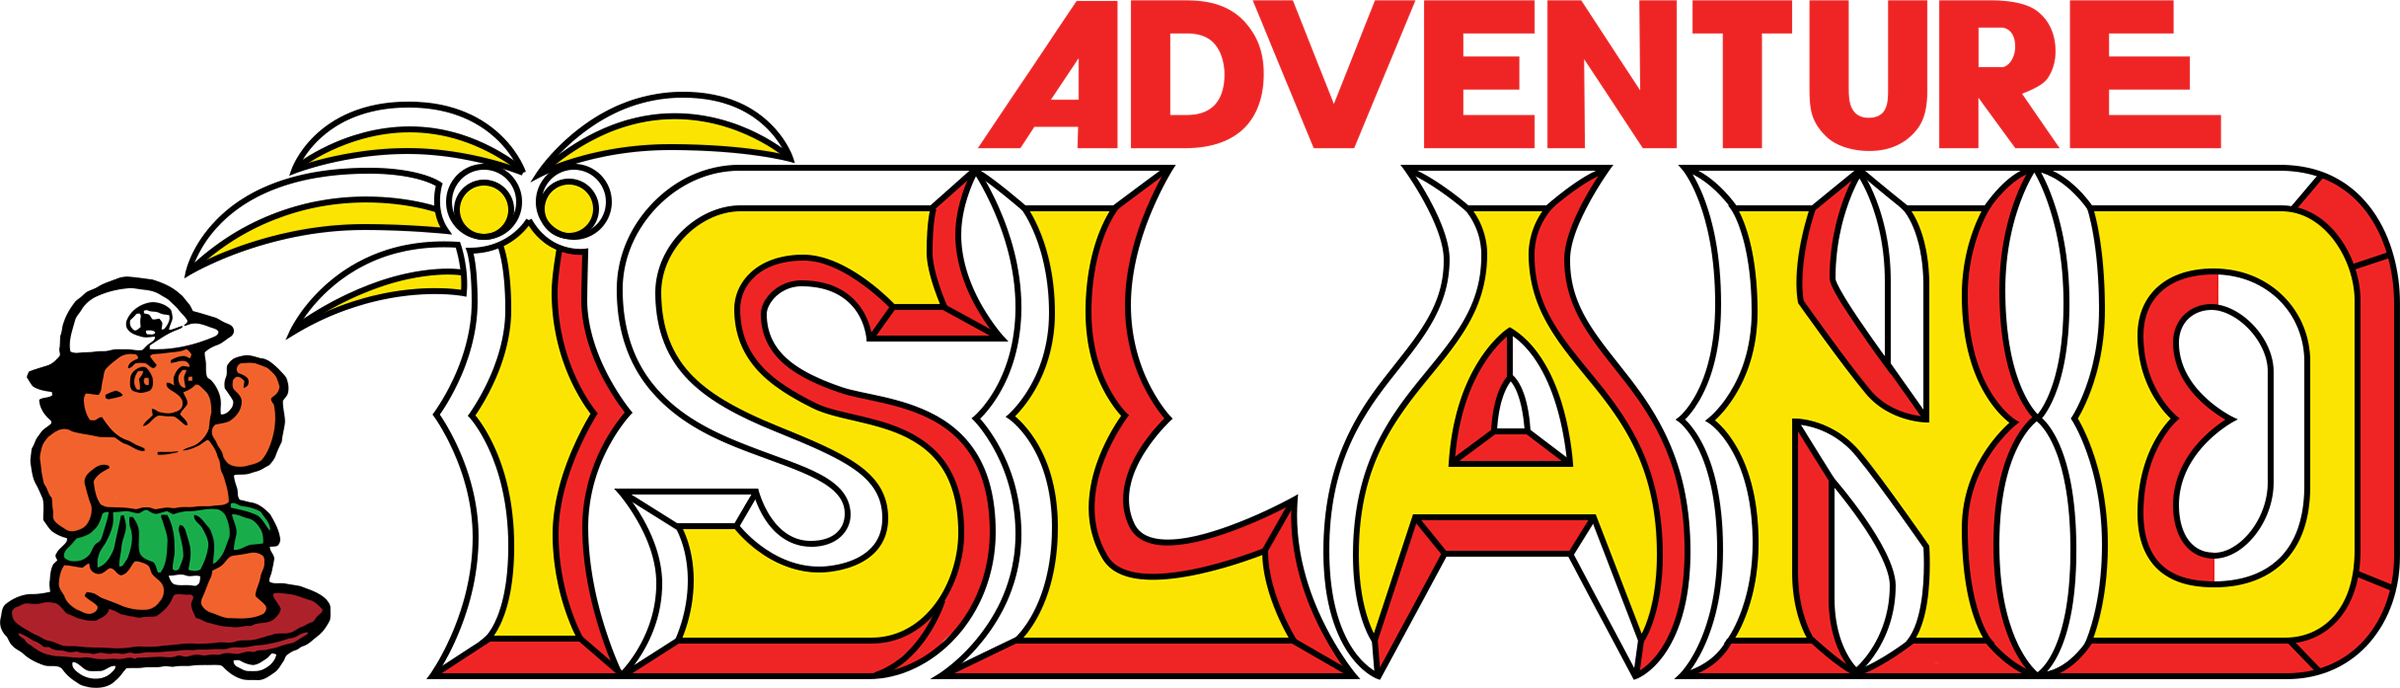 Adventure Island Details - LaunchBox Games Database